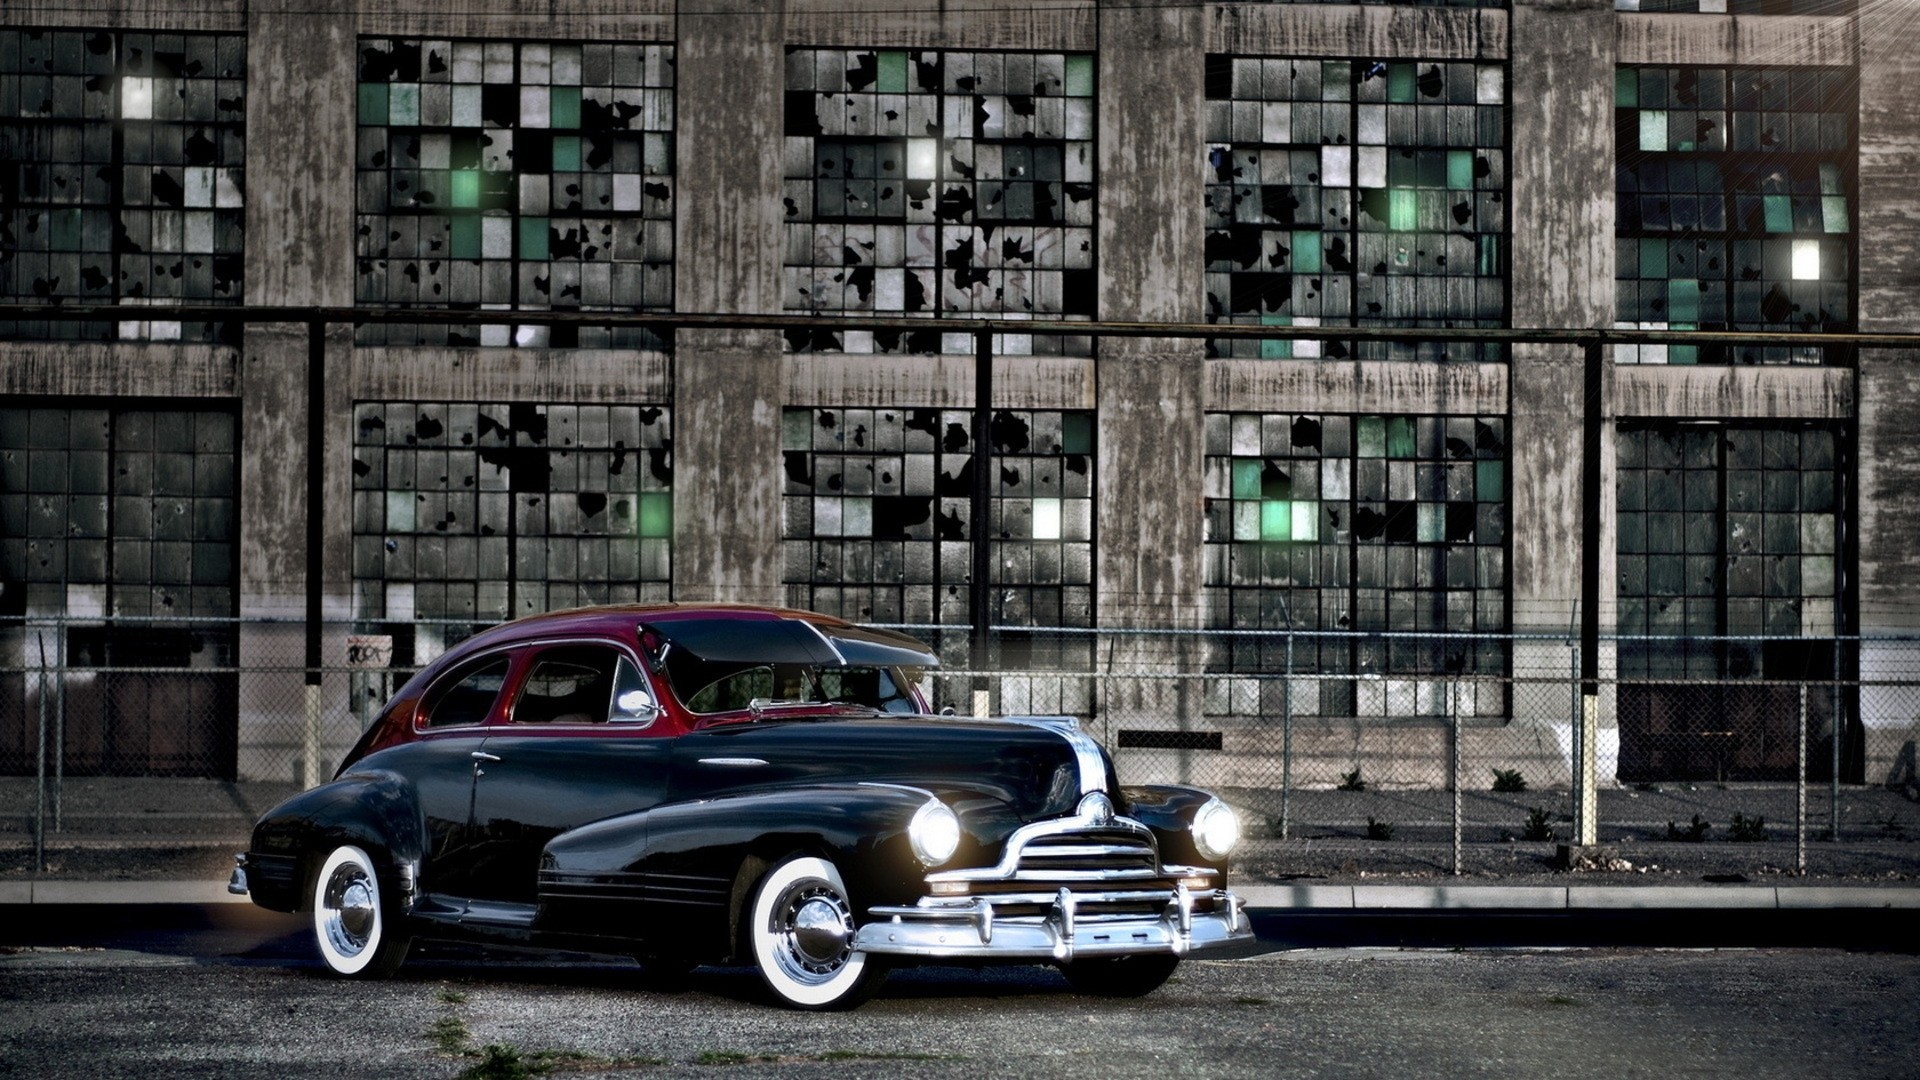 Abandoned Warehouse Fence Car Vintage Cars